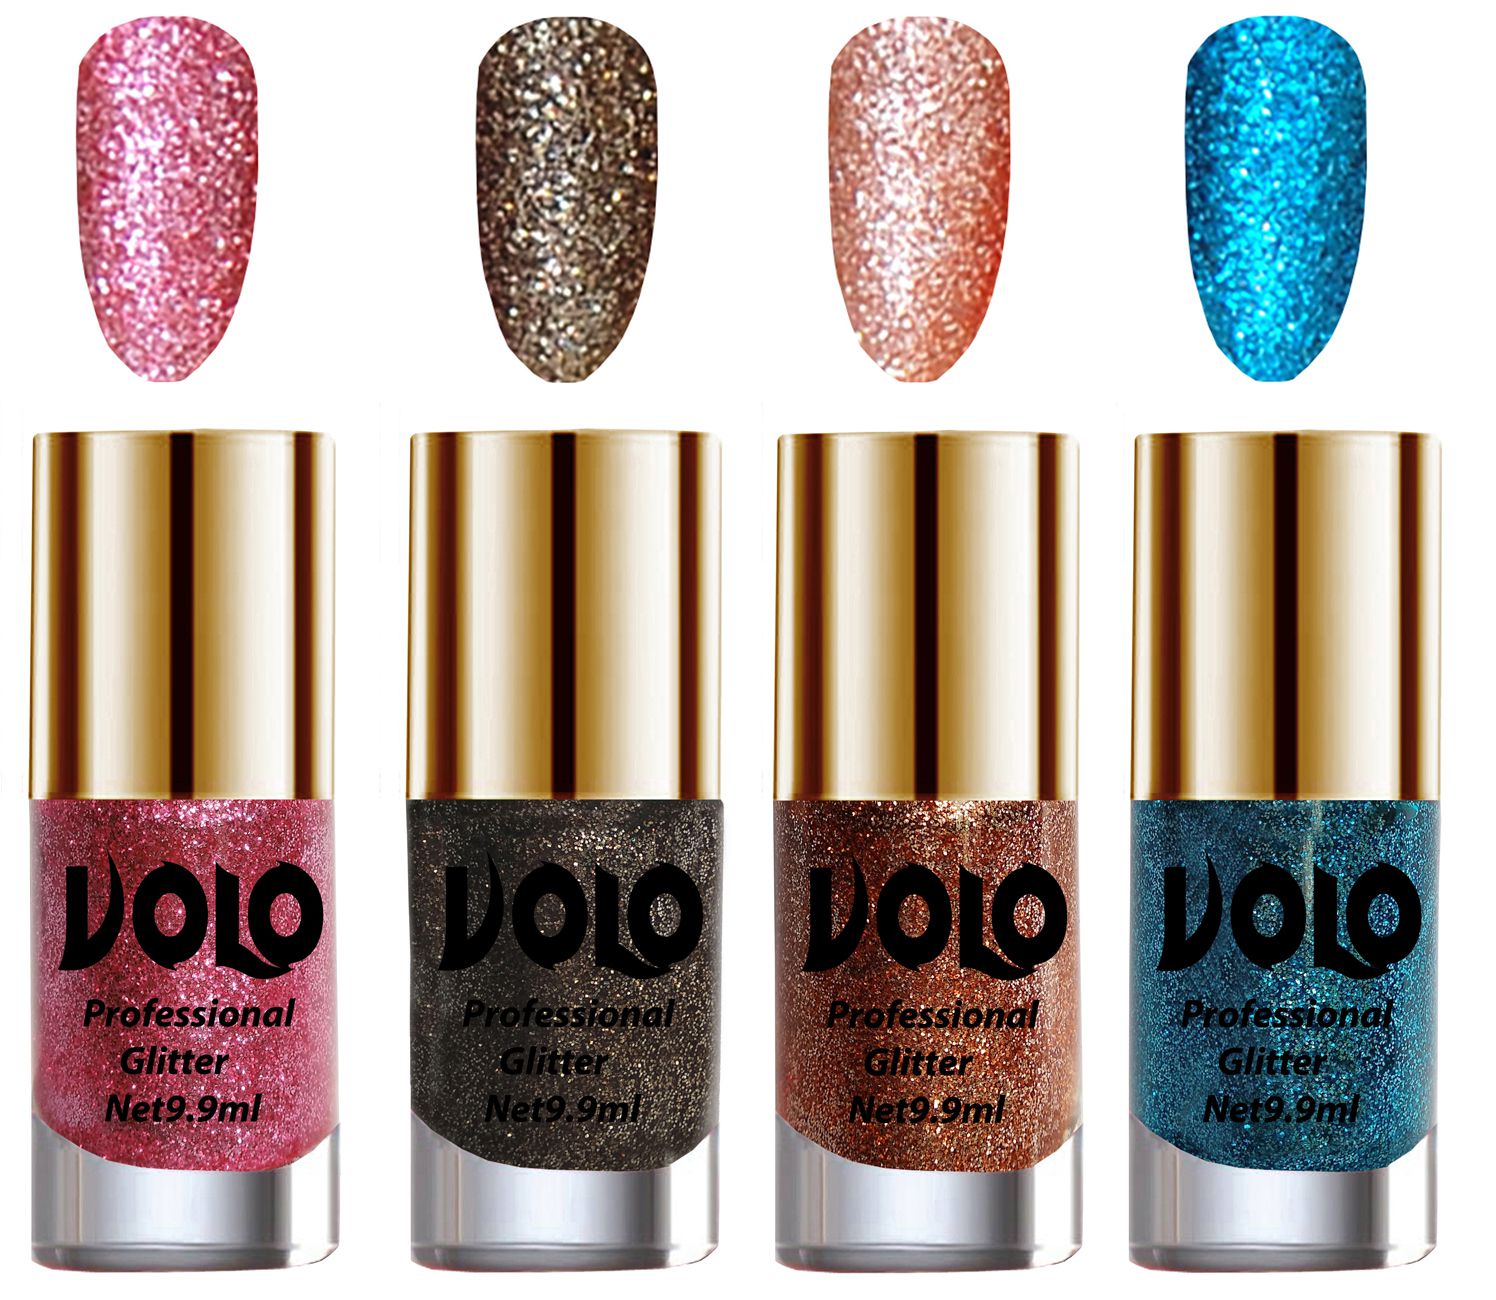     			VOLO Professionally Used Glitter Shine Nail Polish Pink,Grey,Peach Blue Pack of 4 39 mL